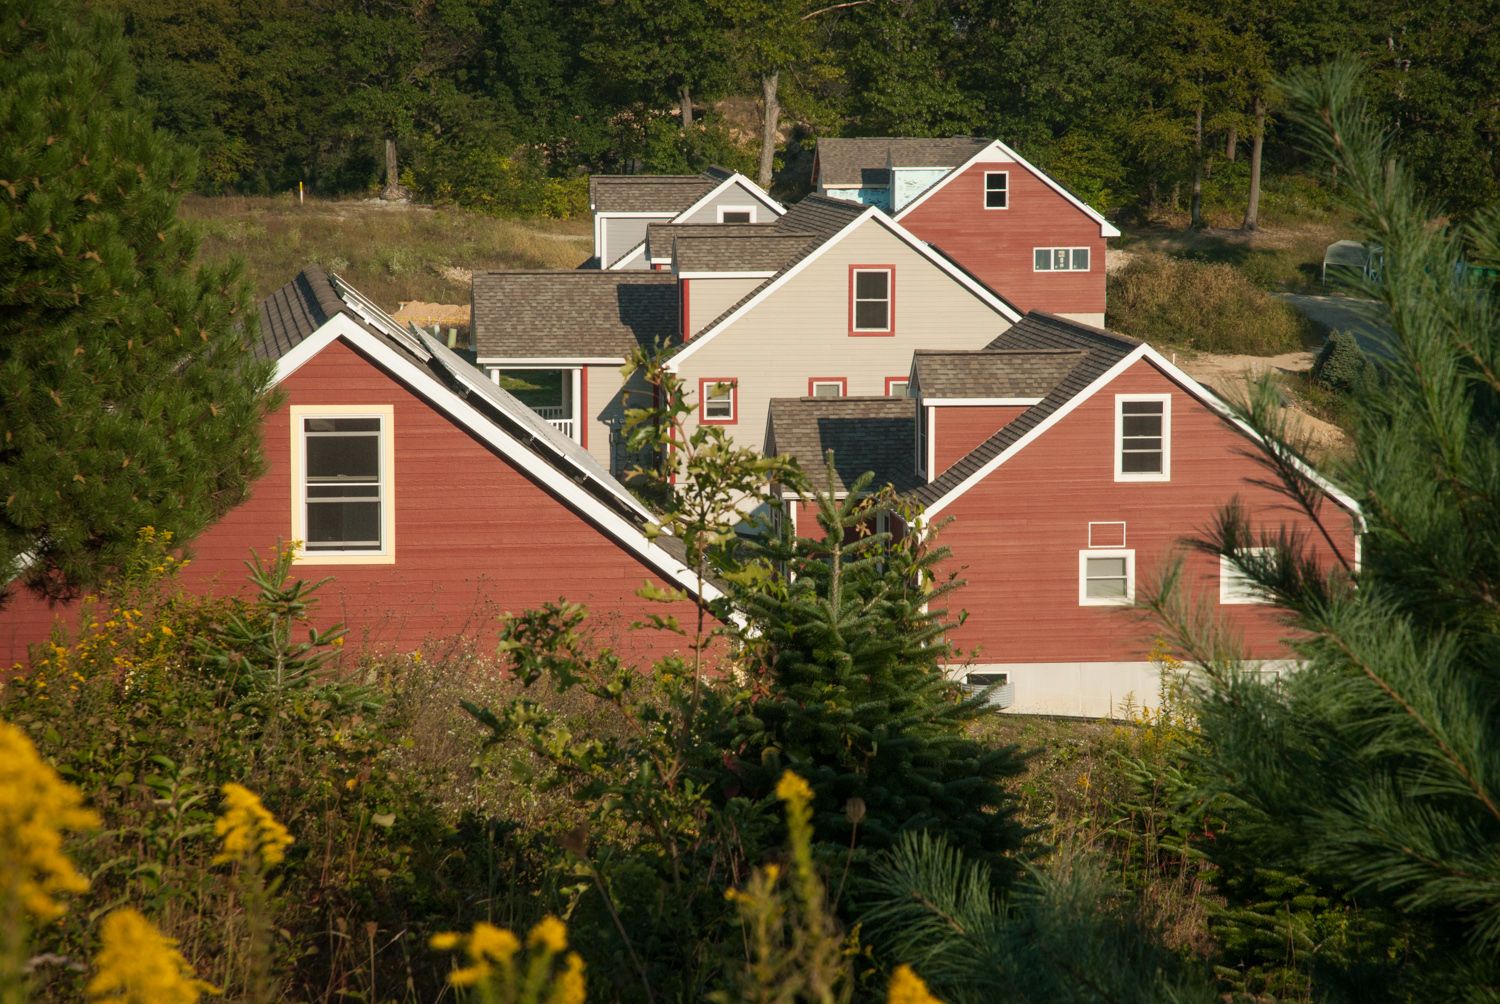 100 Fold Farm Sustainable Co-housing Community